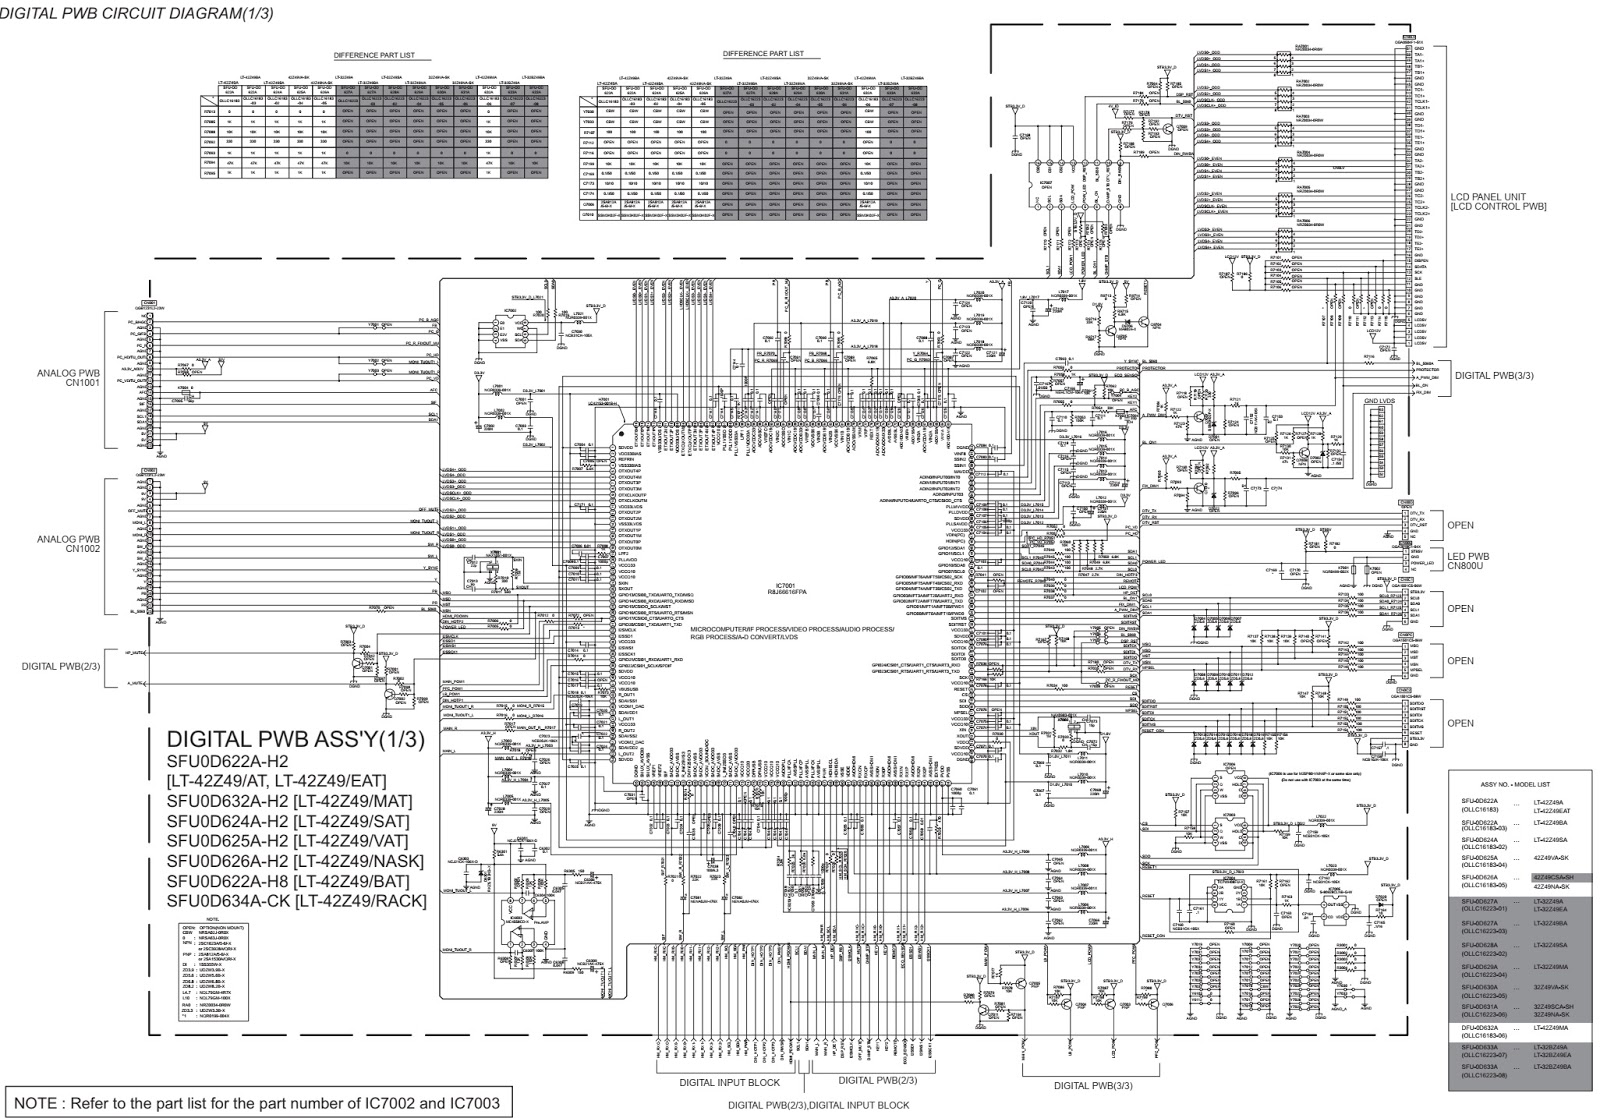 Schematic Diagrams: LT42Z49 JVC LCD TV SMPS schematic, digital